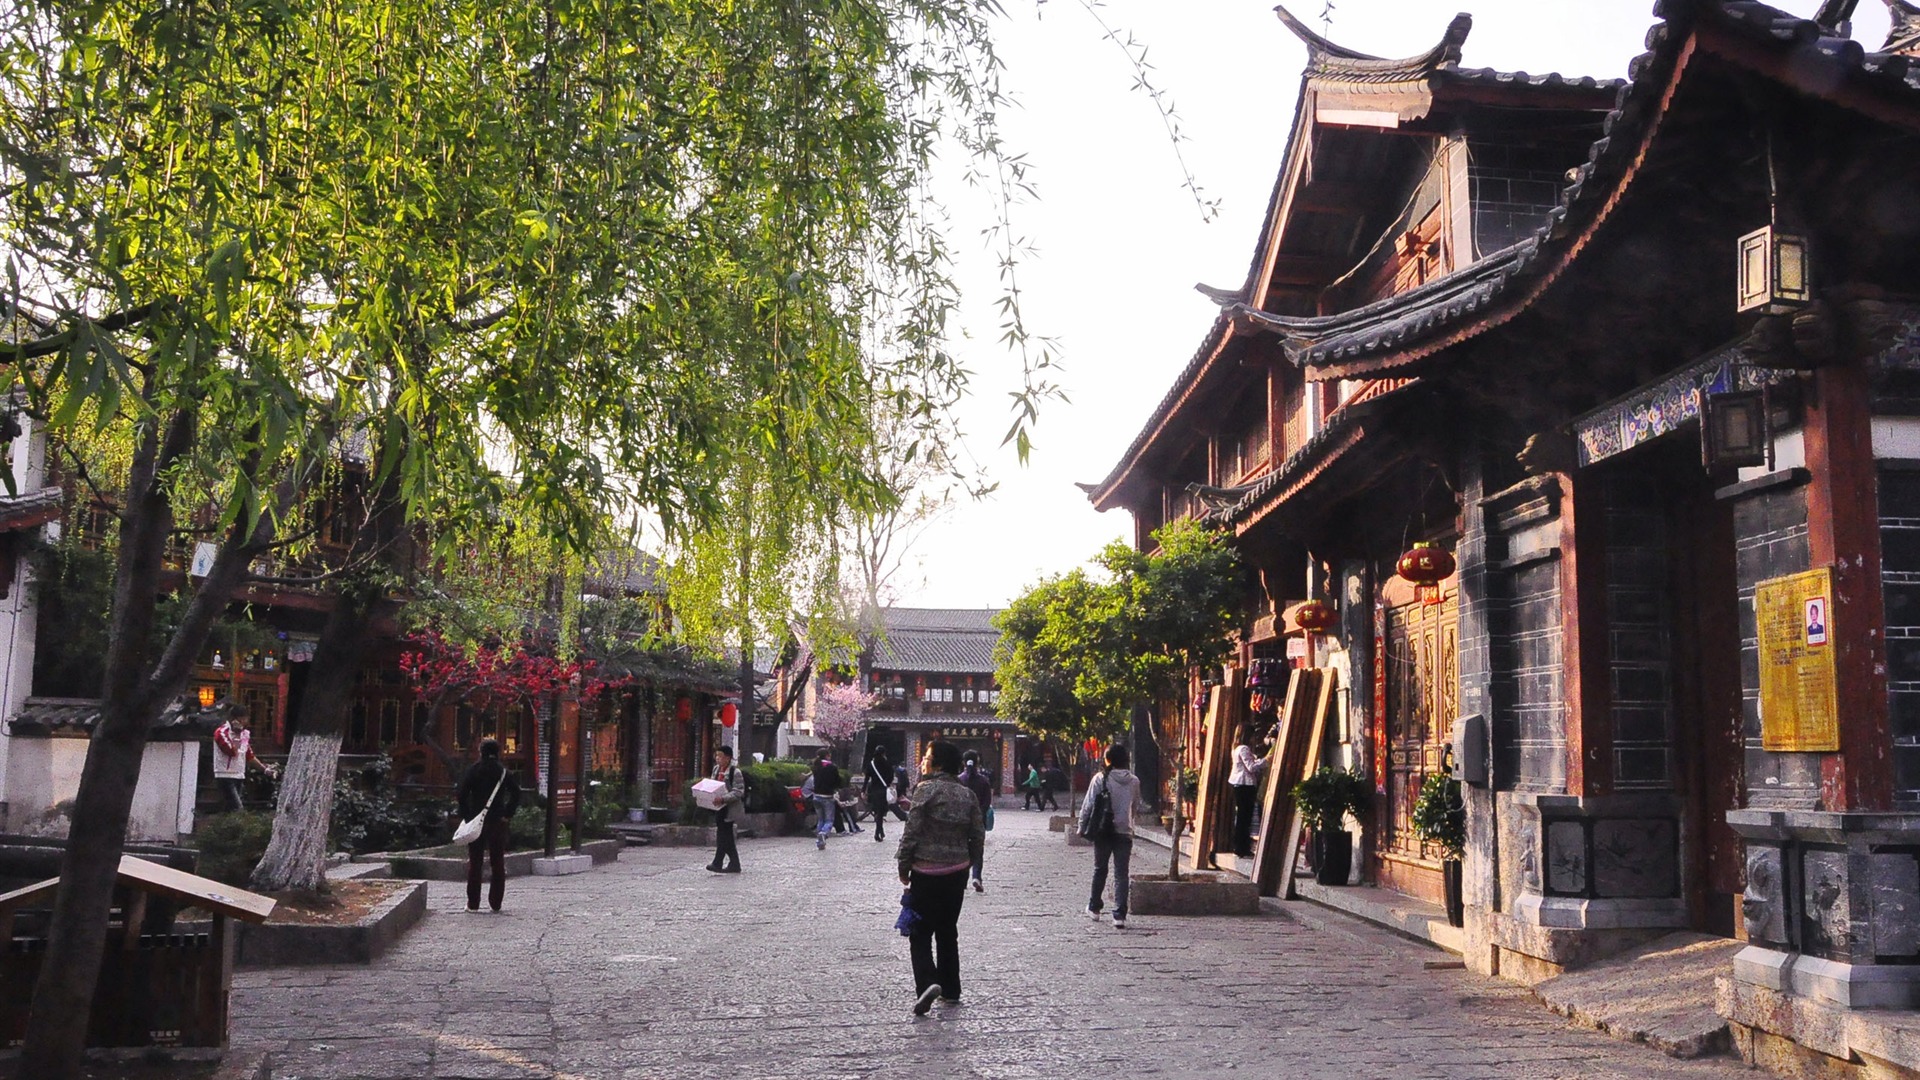 Lijiang ancient town atmosphere (2) (old Hong OK works) #3 - 1920x1080